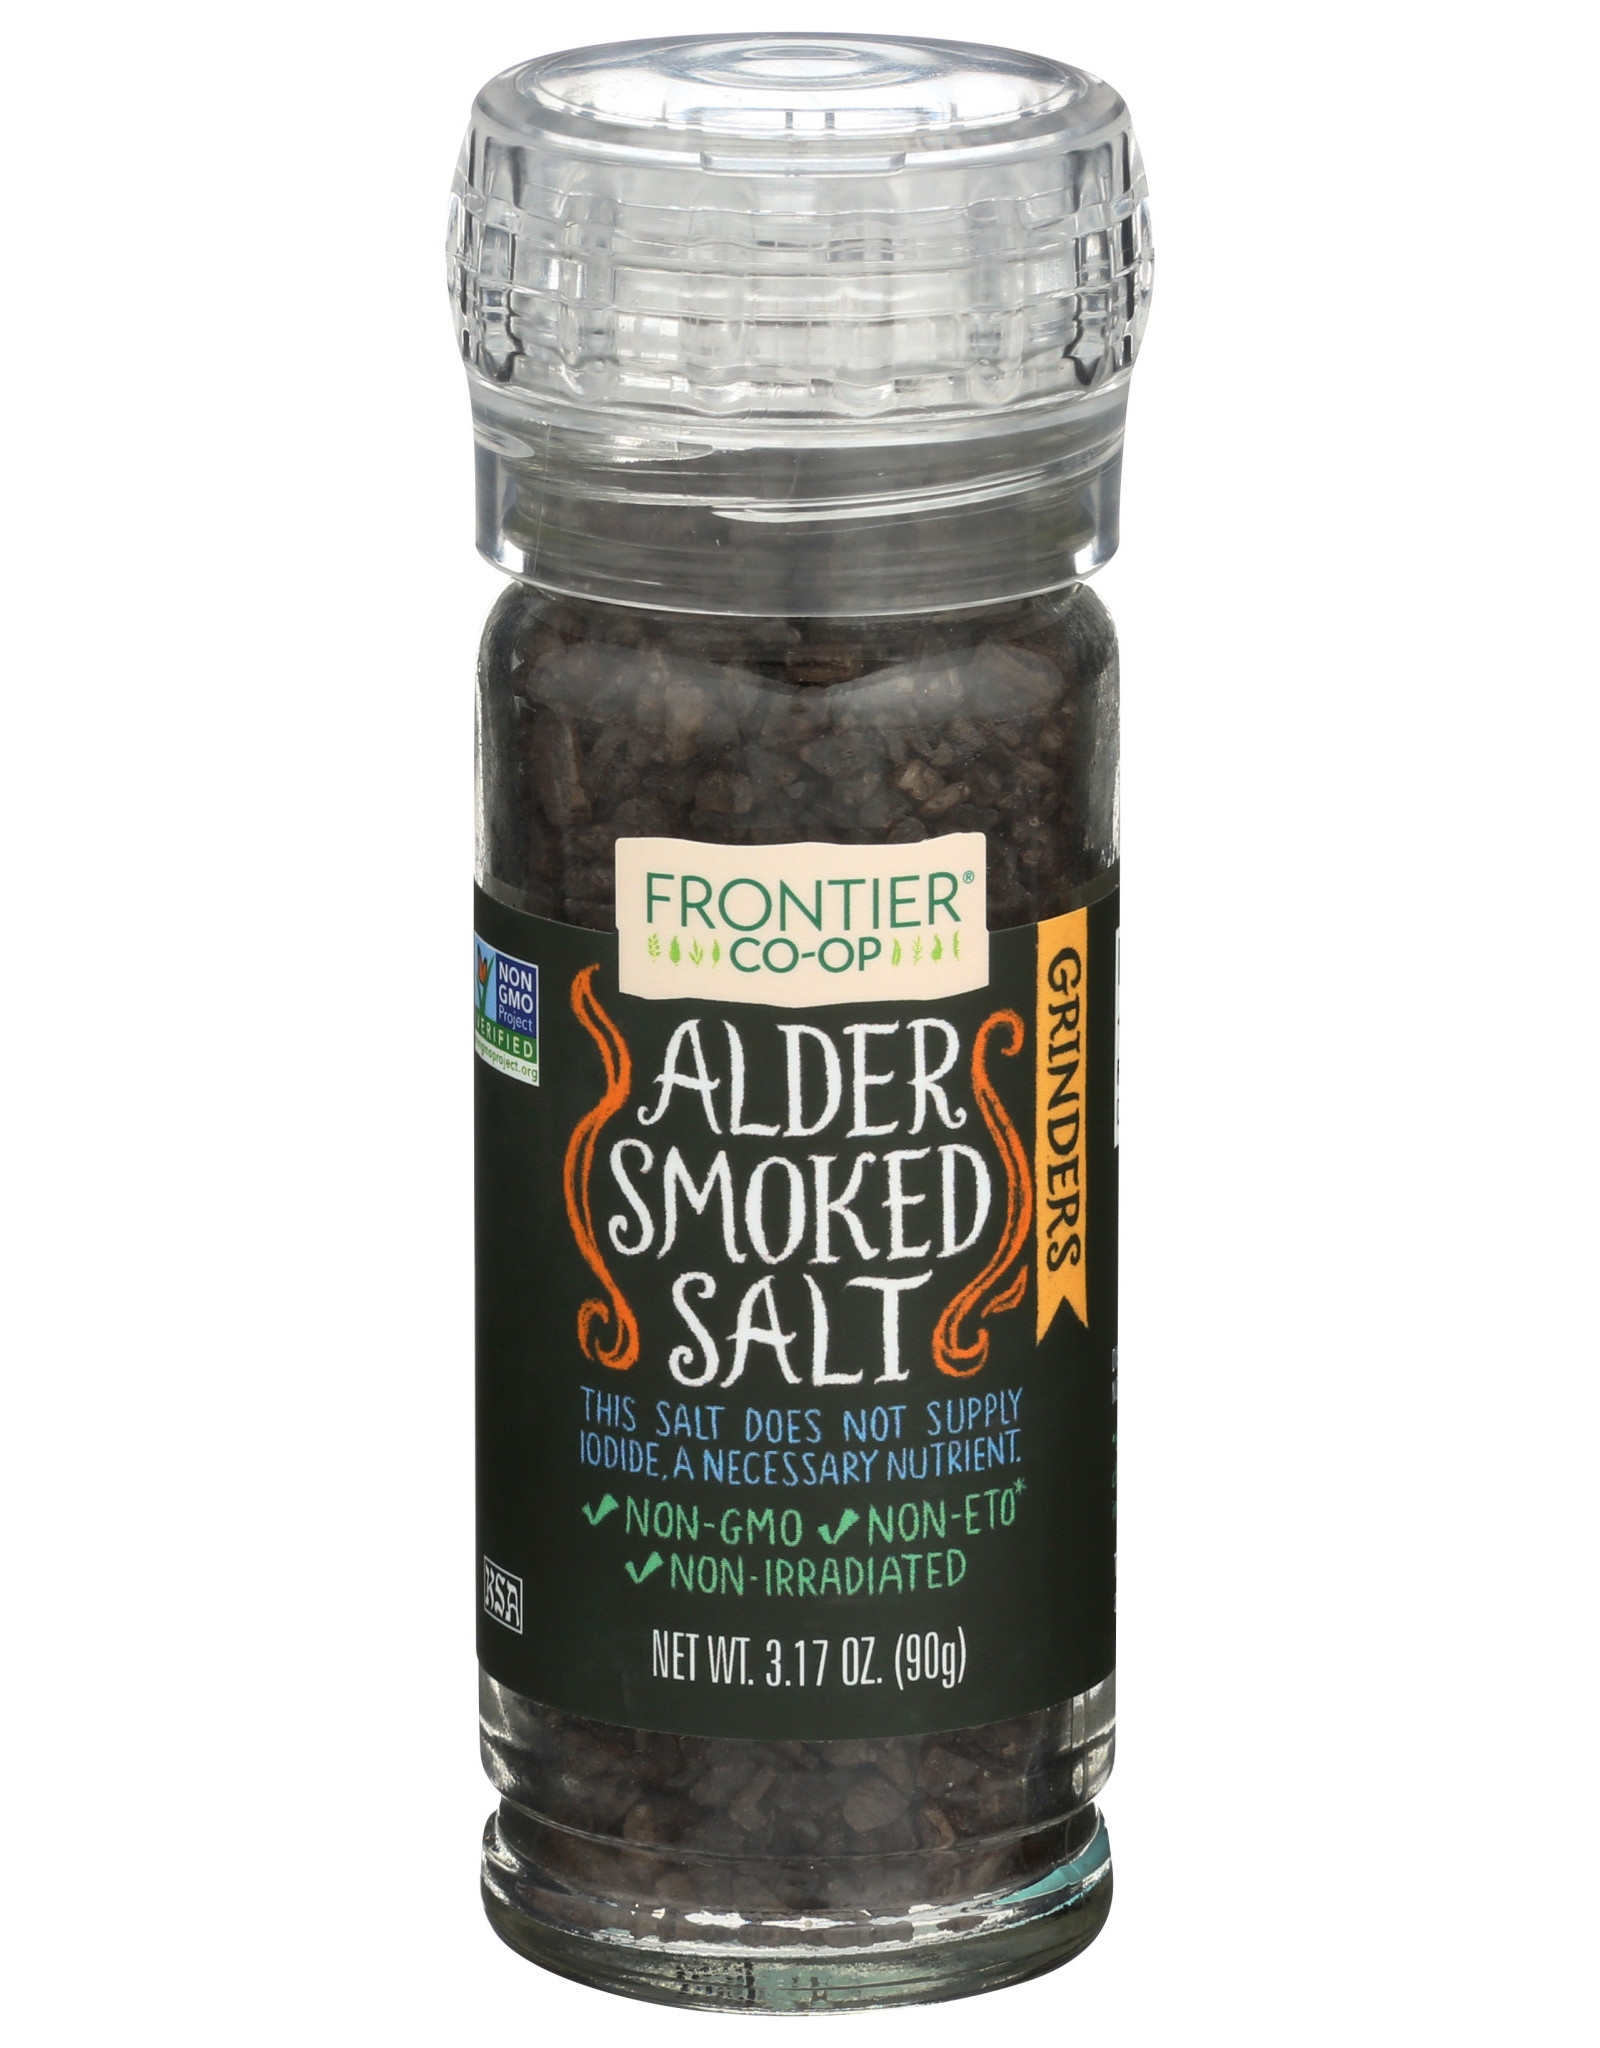 Alder Smoked Salt